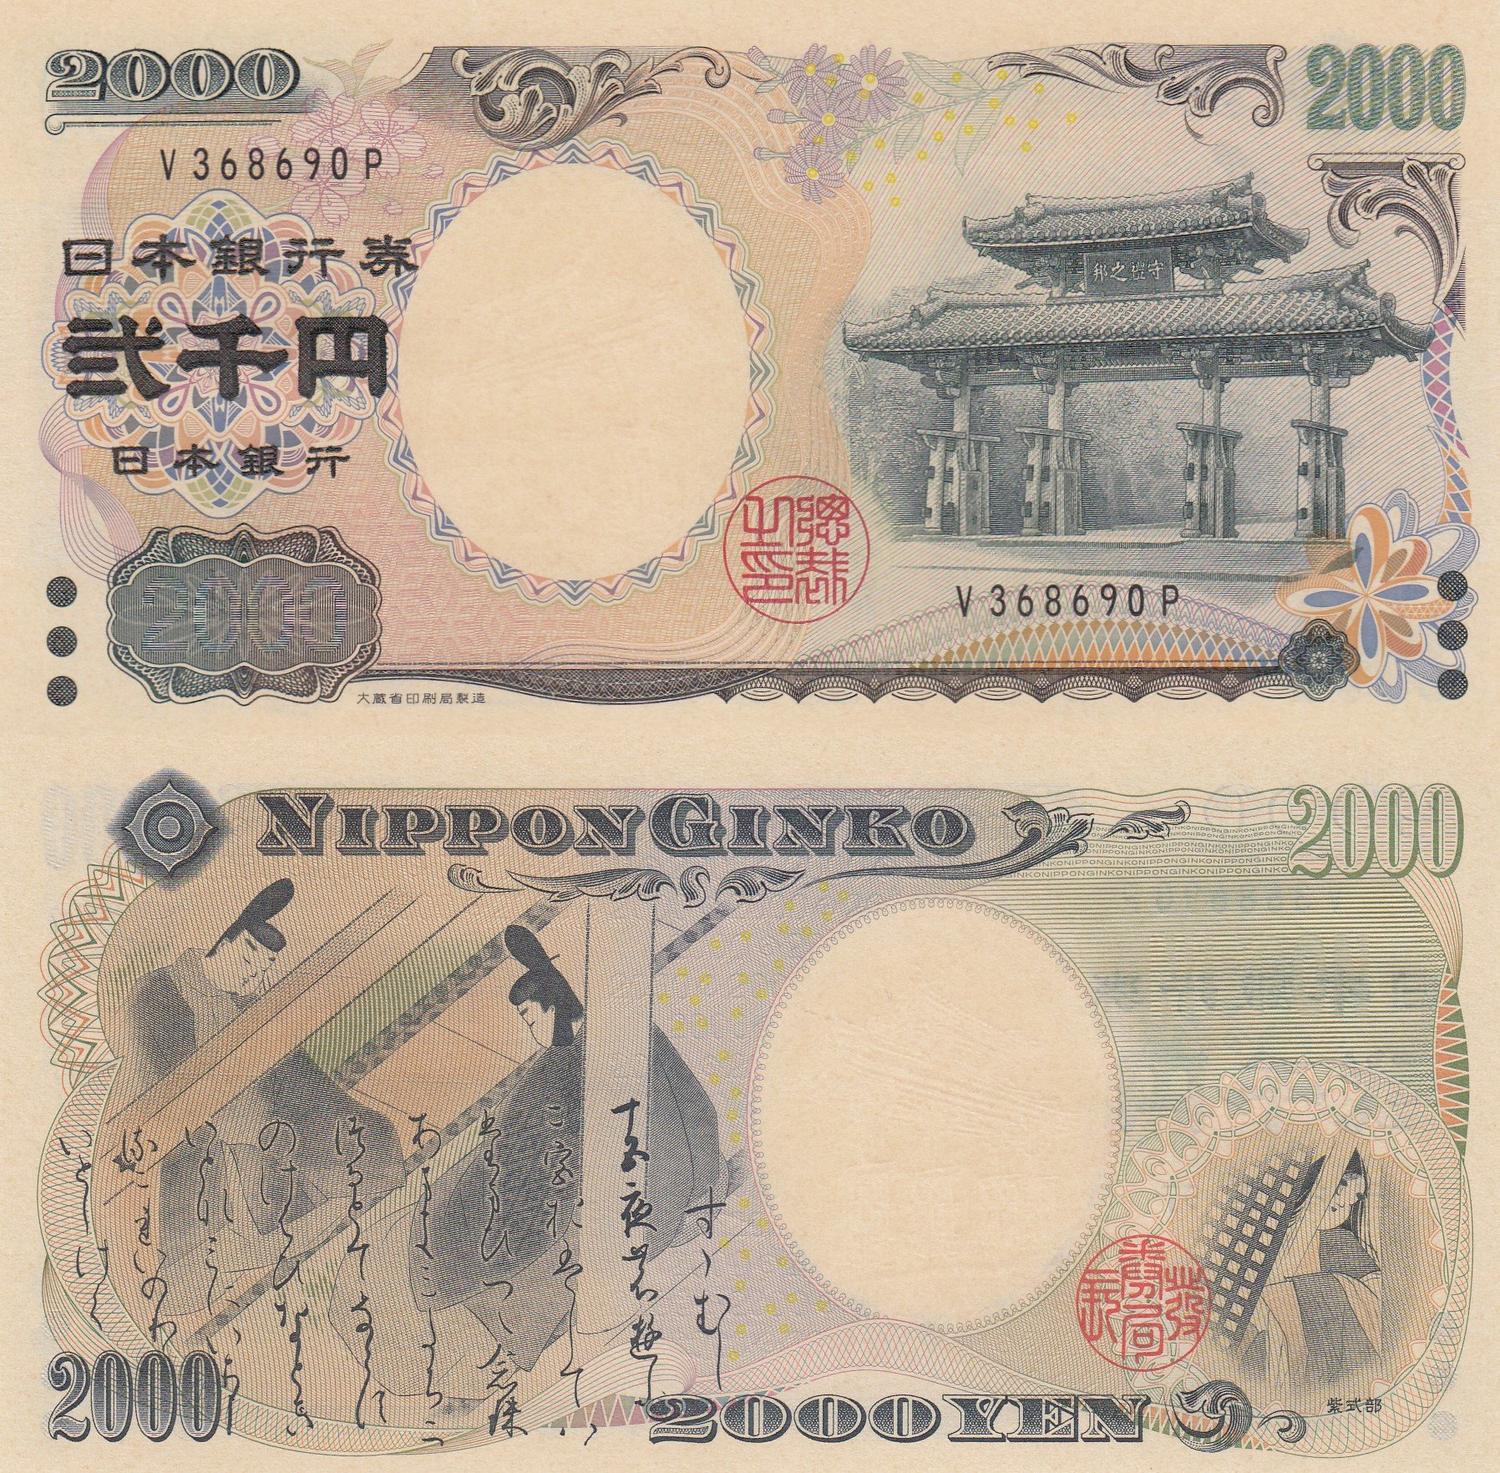 JAPAN 2000 2,000 YEN P103 2000 G 8 SUMMIT COMMEMORATIVE UNC JAPANESE MONEY NOTE